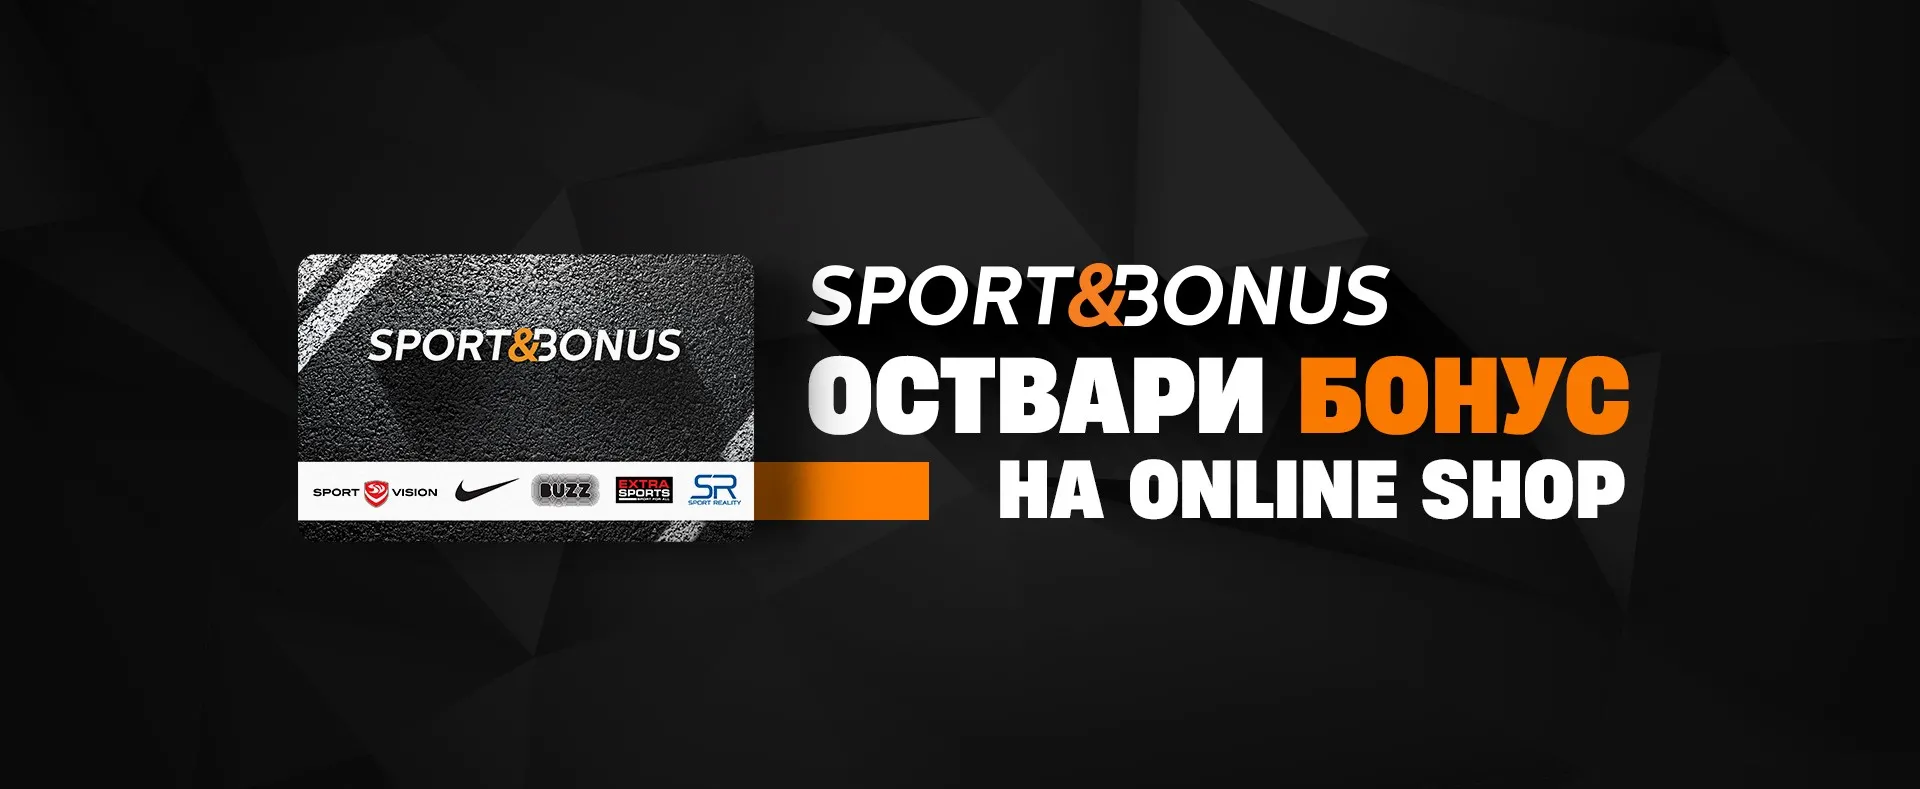 Sport&Bonus